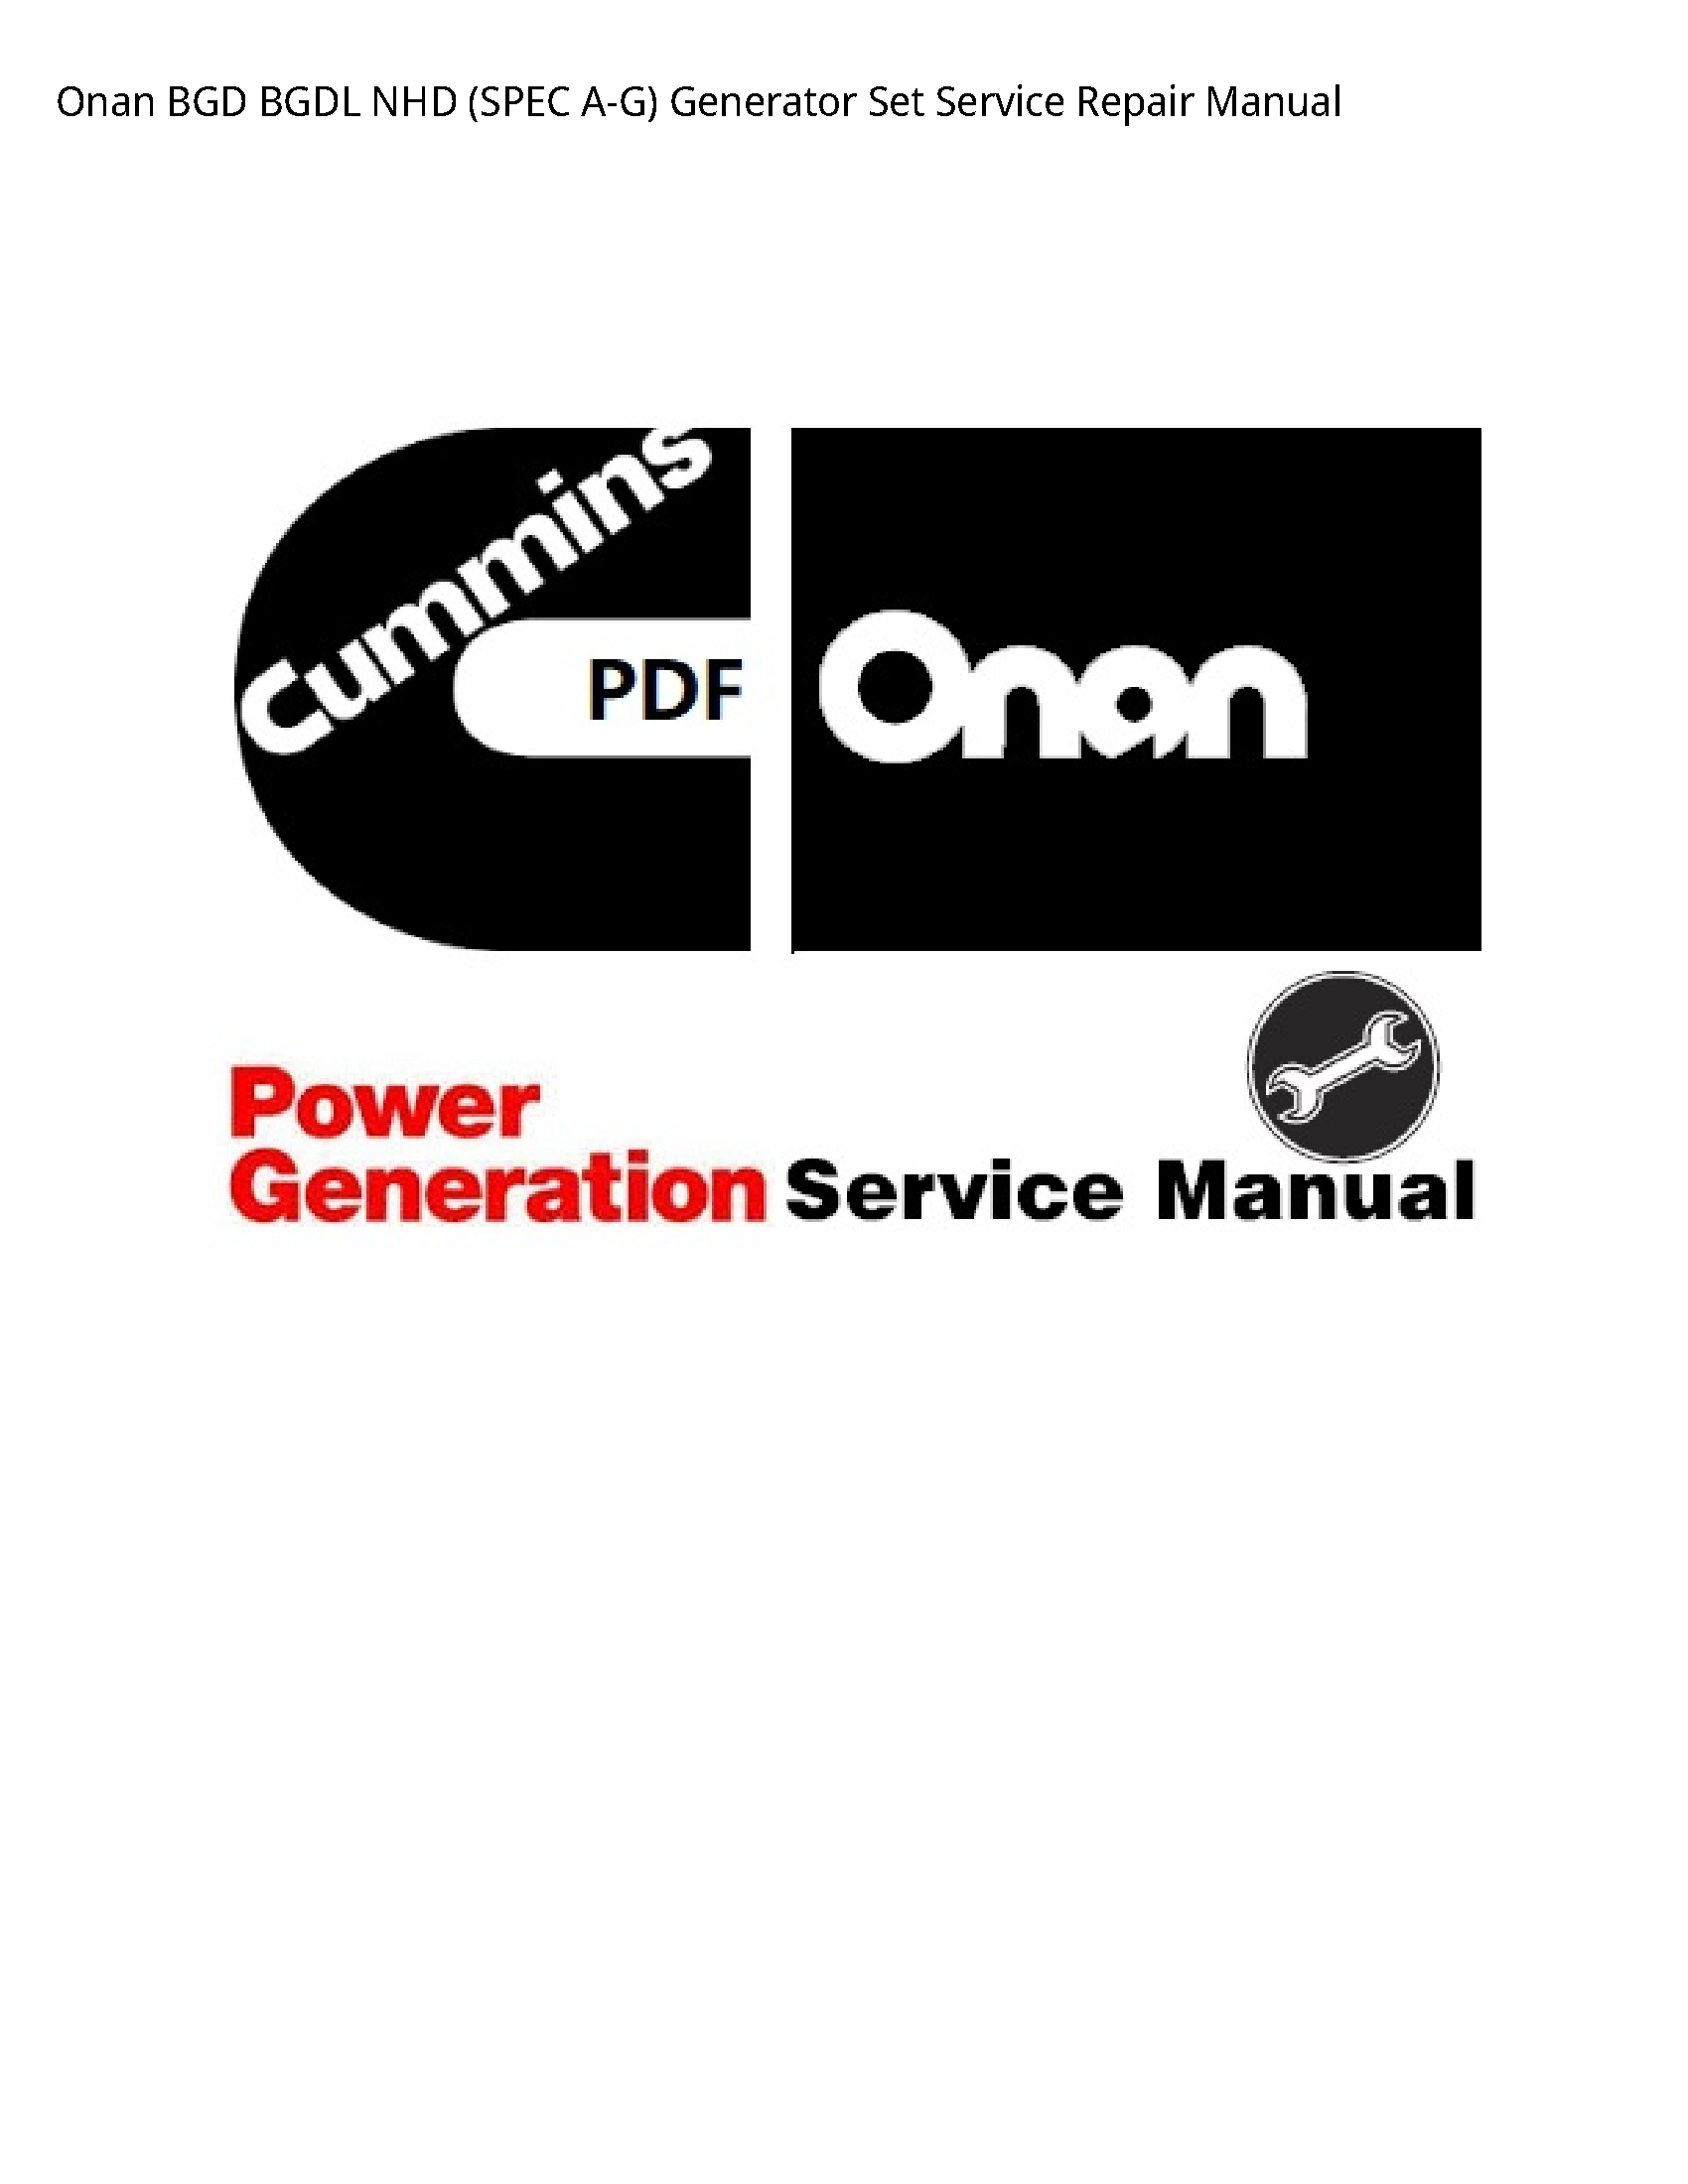 Onan BGD BGDL NHD (SPEC A-G) Generator Set manual